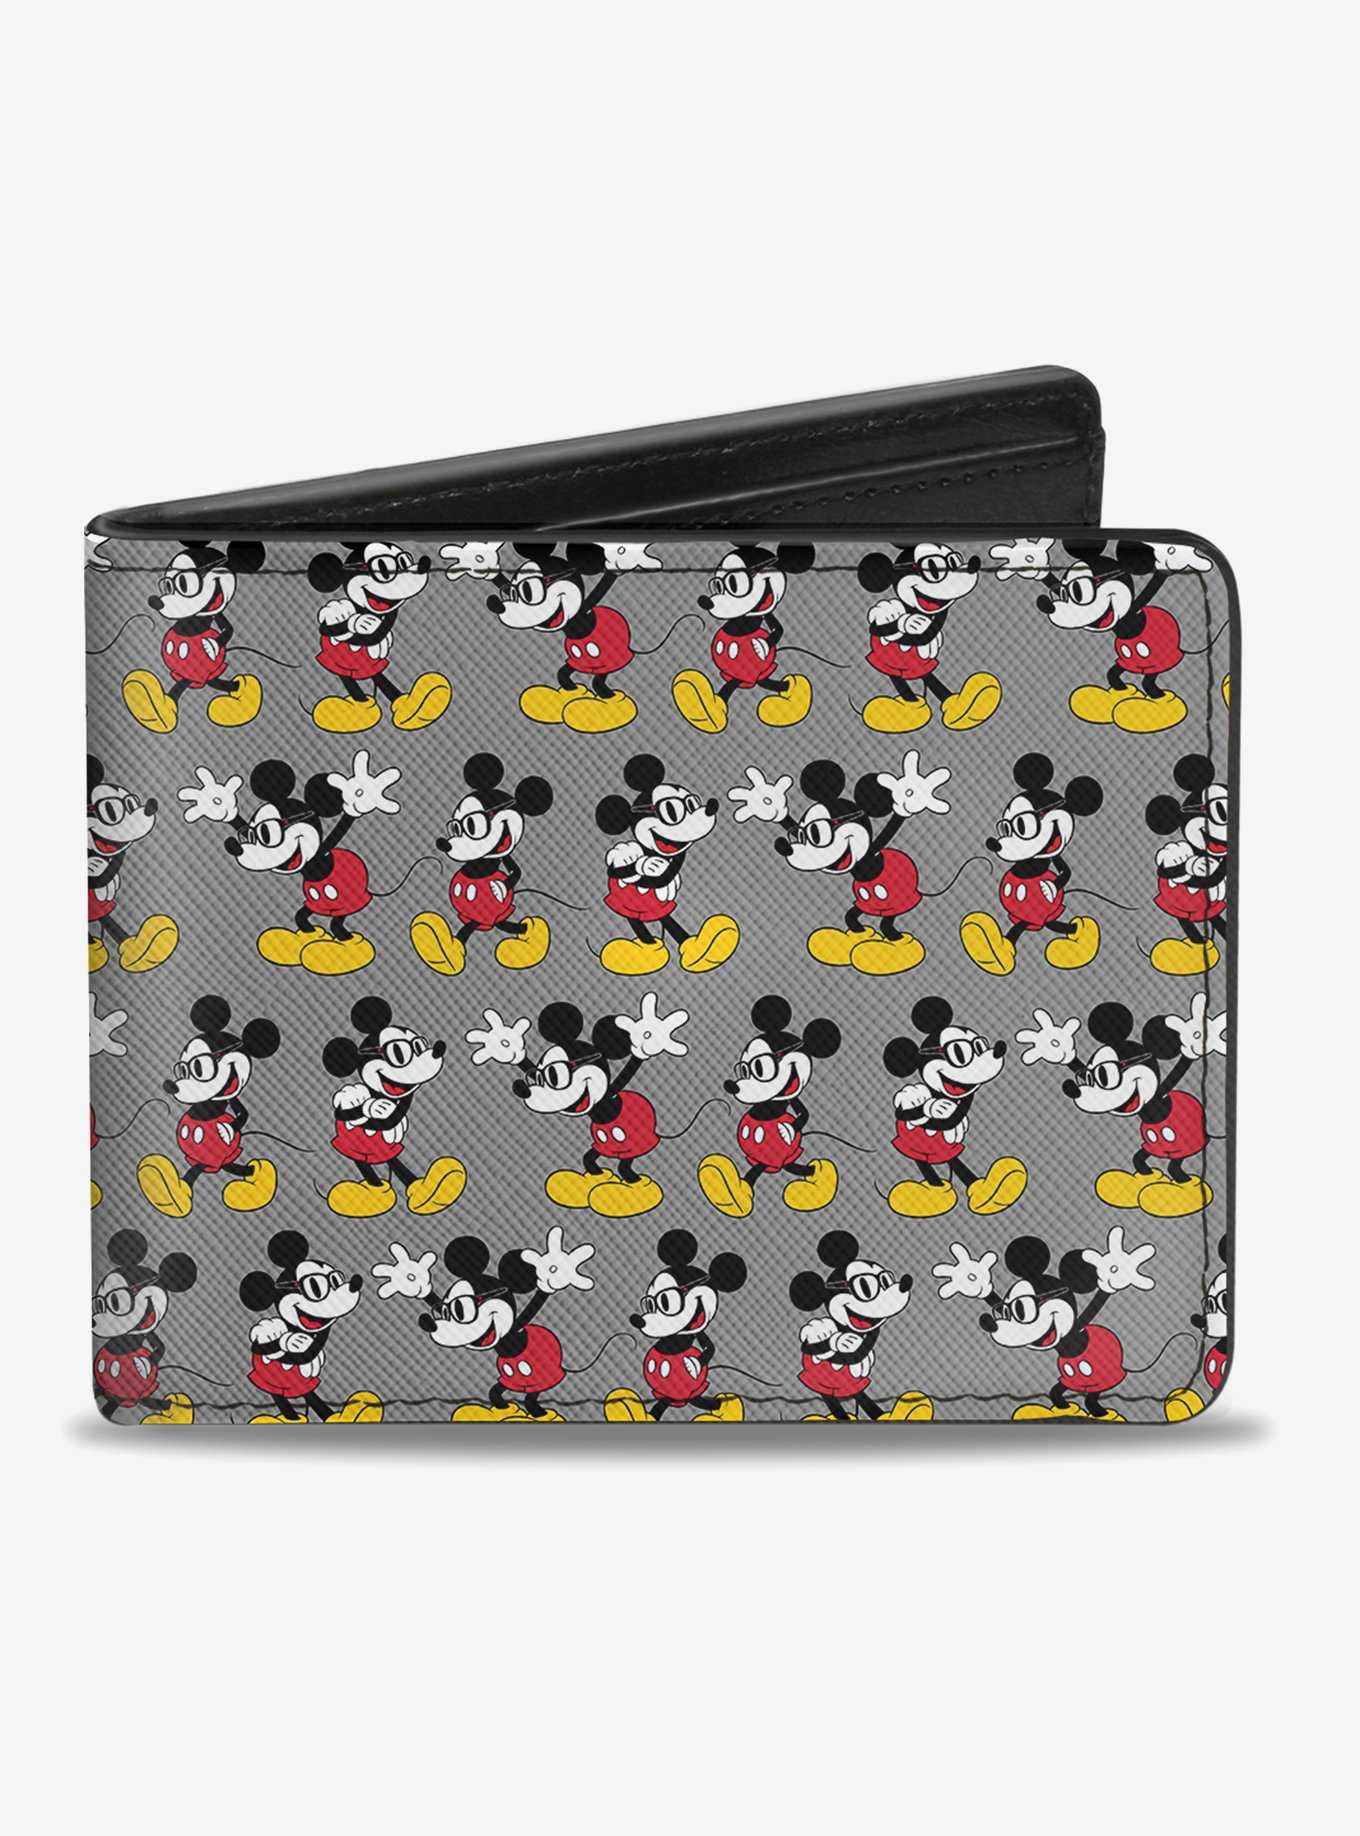 Disney Mickey Mouse Nerdy Poses Bi-Fold Wallet, , hi-res